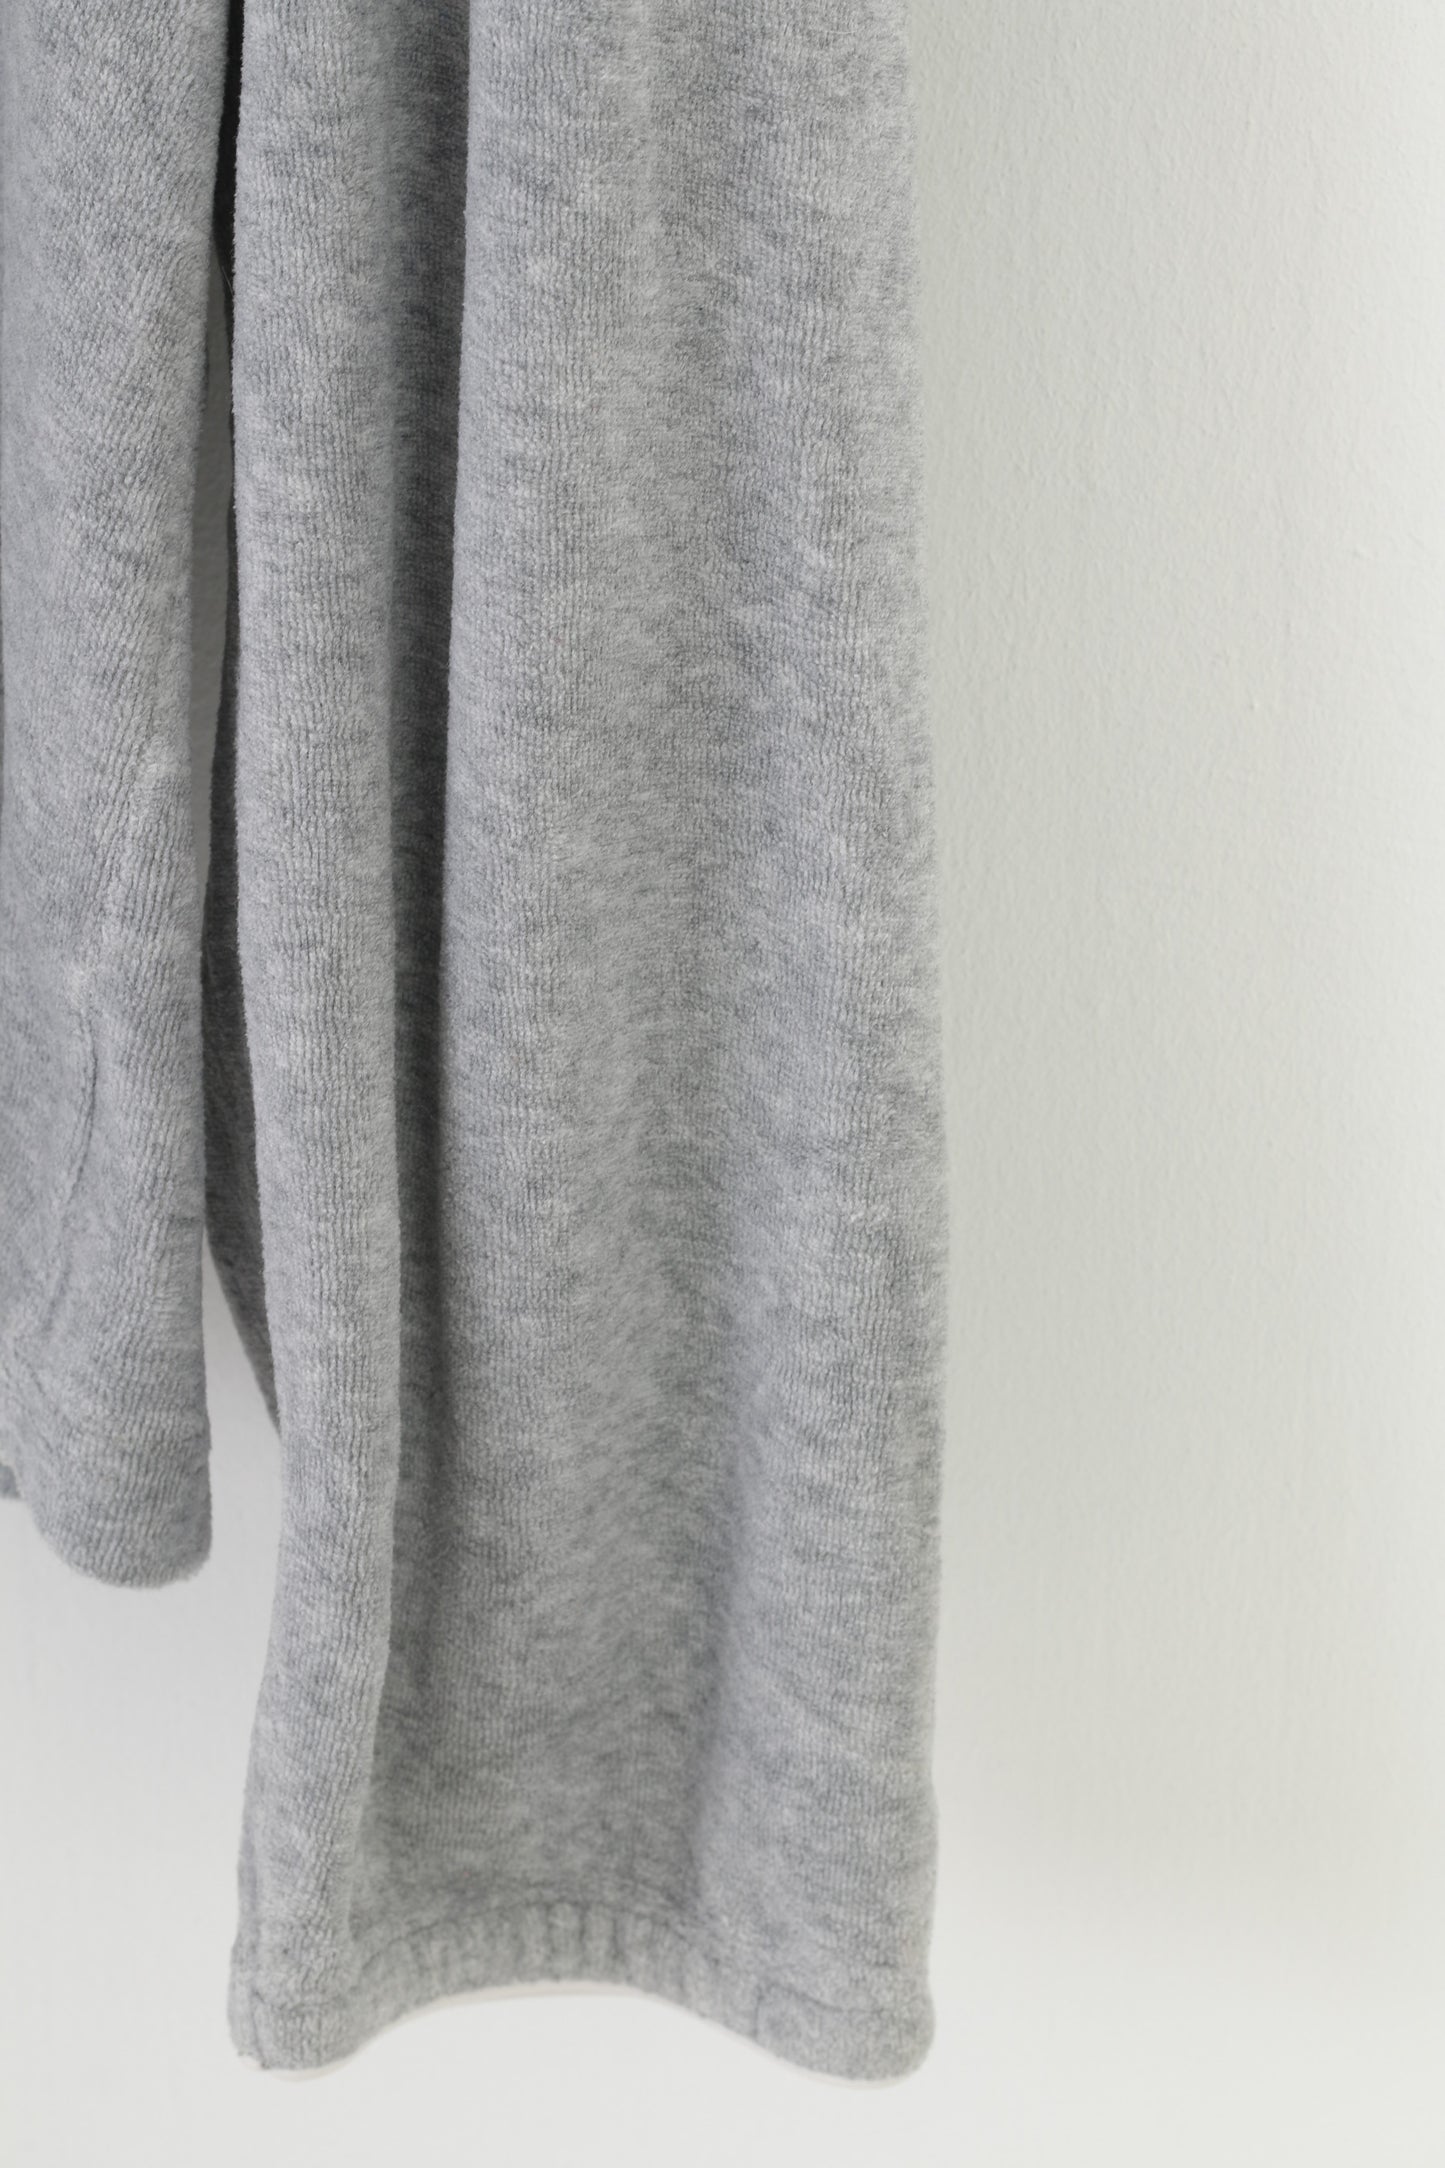 Tommy Hilfiger Women XL Sweatshirt Grey Hood Cotton Long Sleeve Sleepwear Vintage Velvet Top